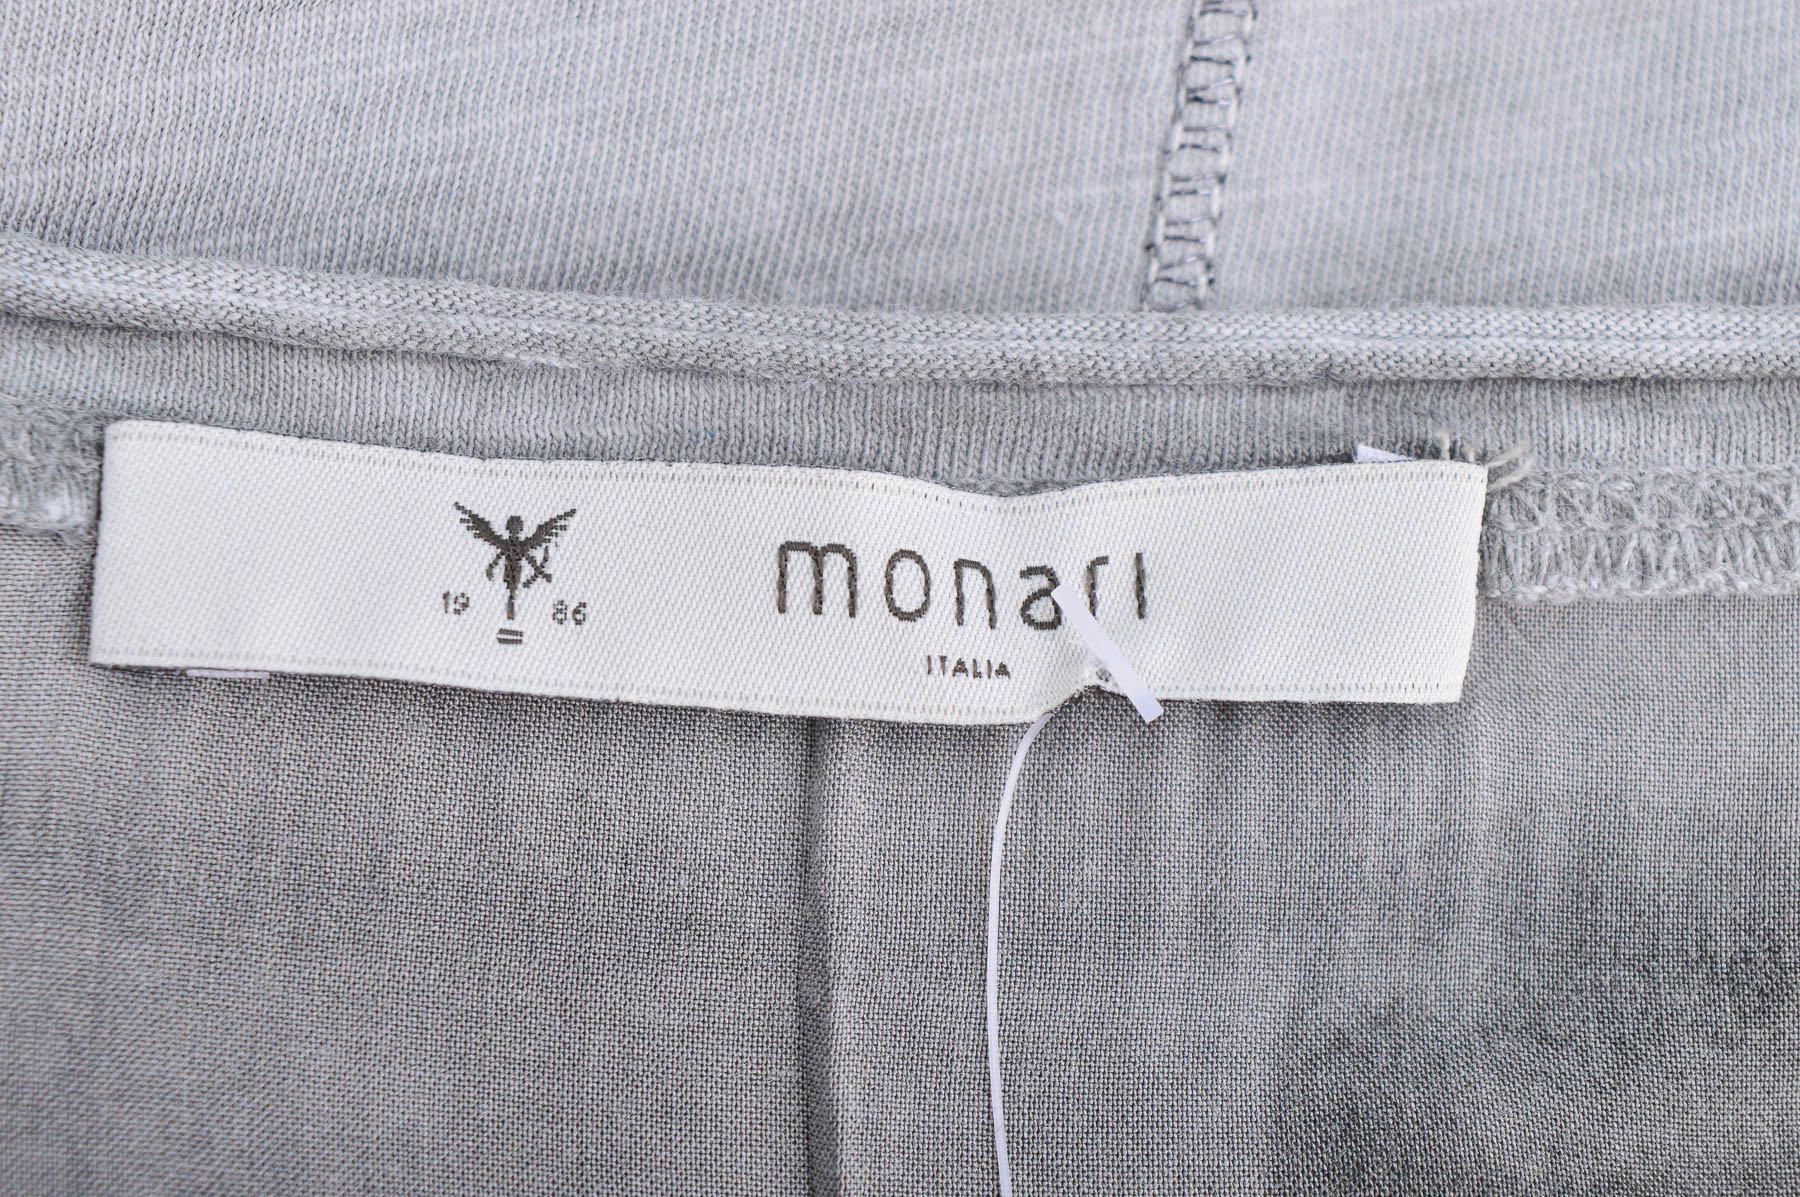 Women's blouse - Monari - 2